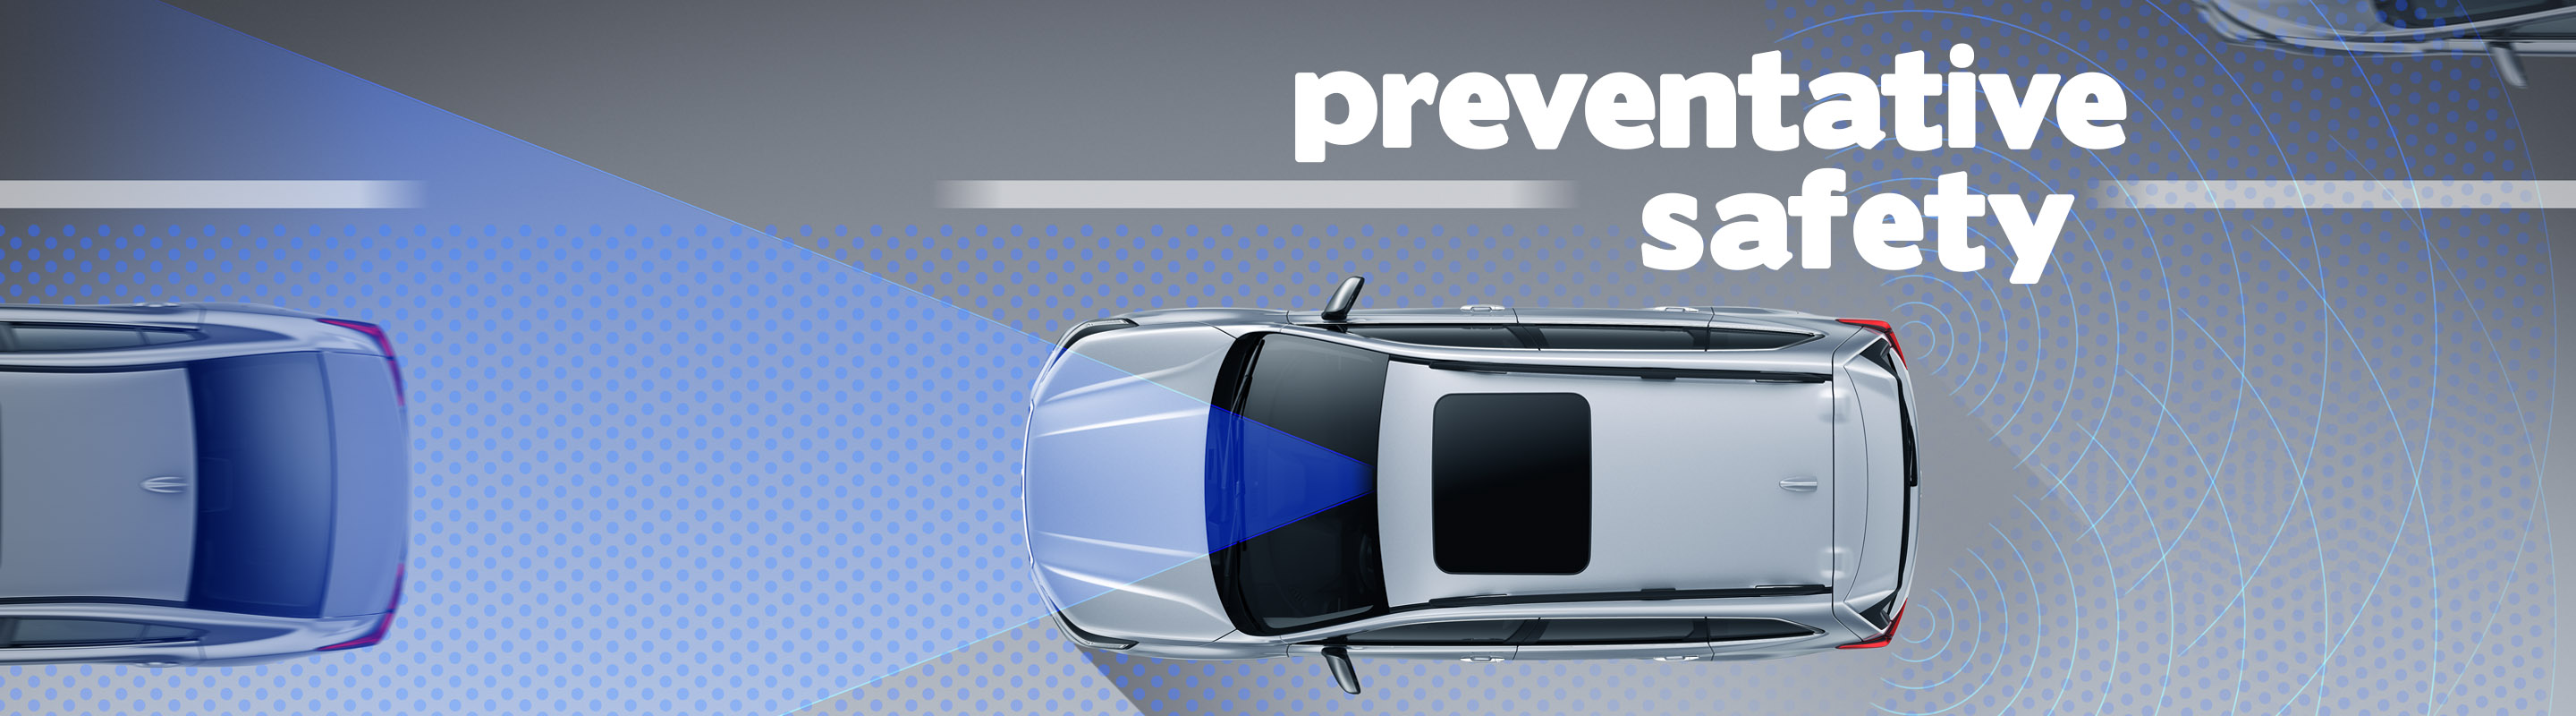 Safety Preventative | Subaru Australia